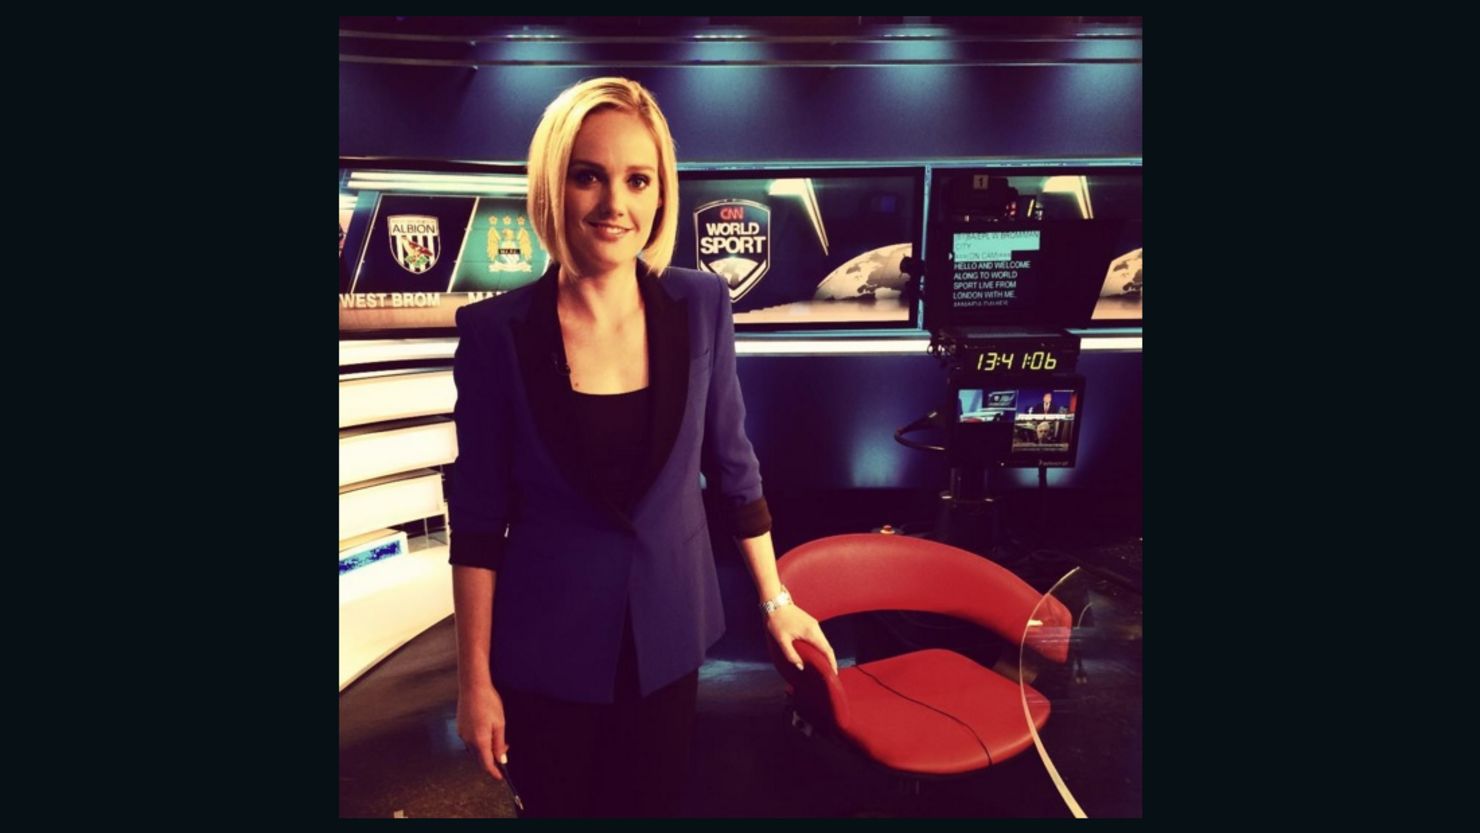 CNN World Sport anchor Amanda Davies has been reporting on football since 2001.